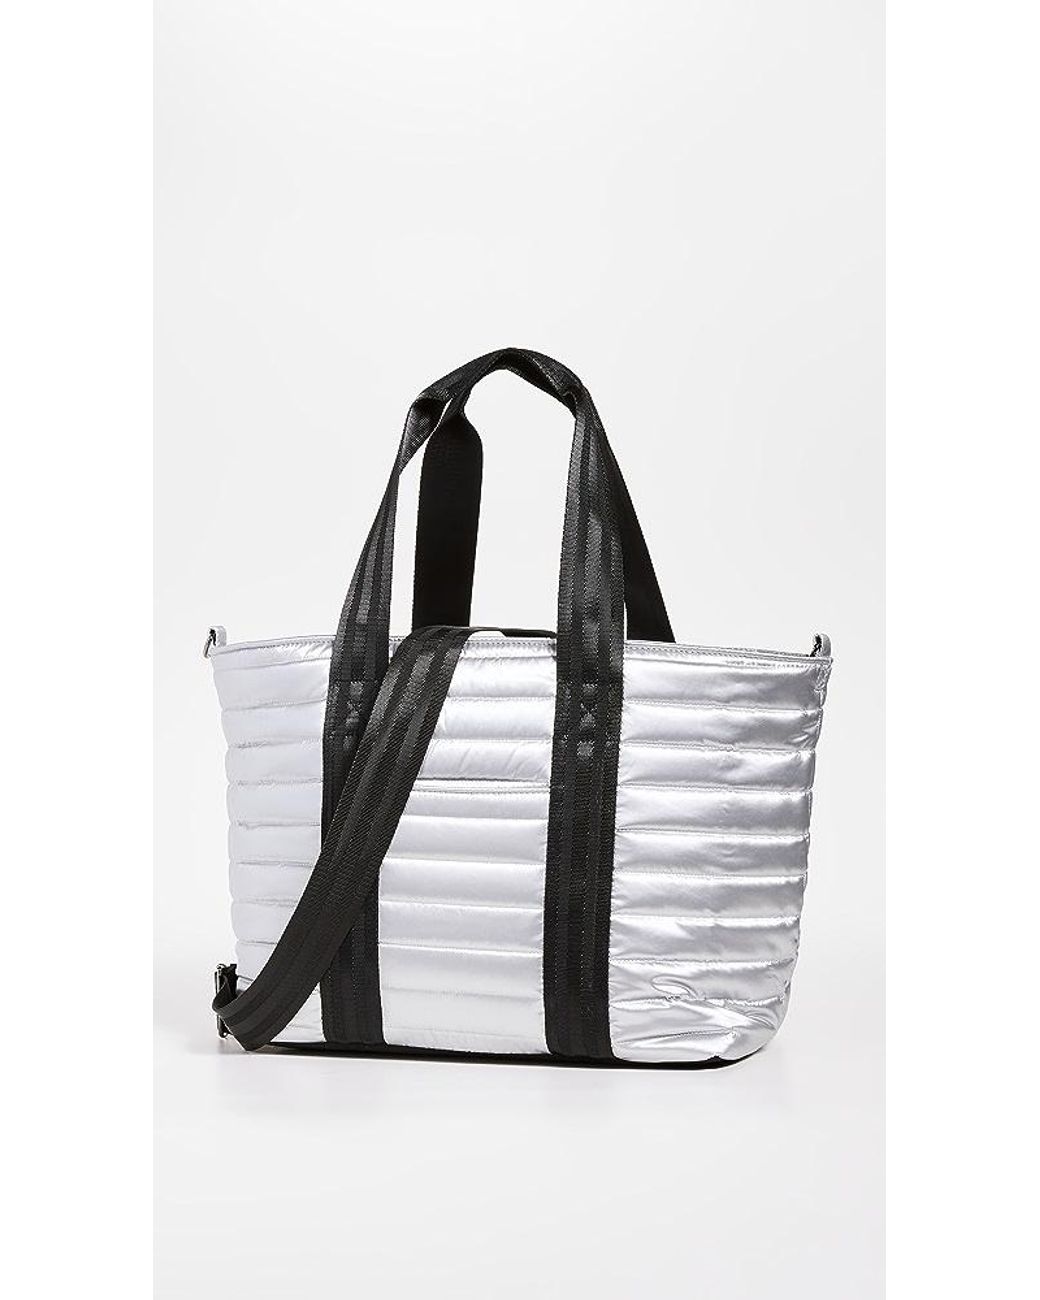 Think Royln Women's Wingman Bag, Black Flight, One Size: Handbags